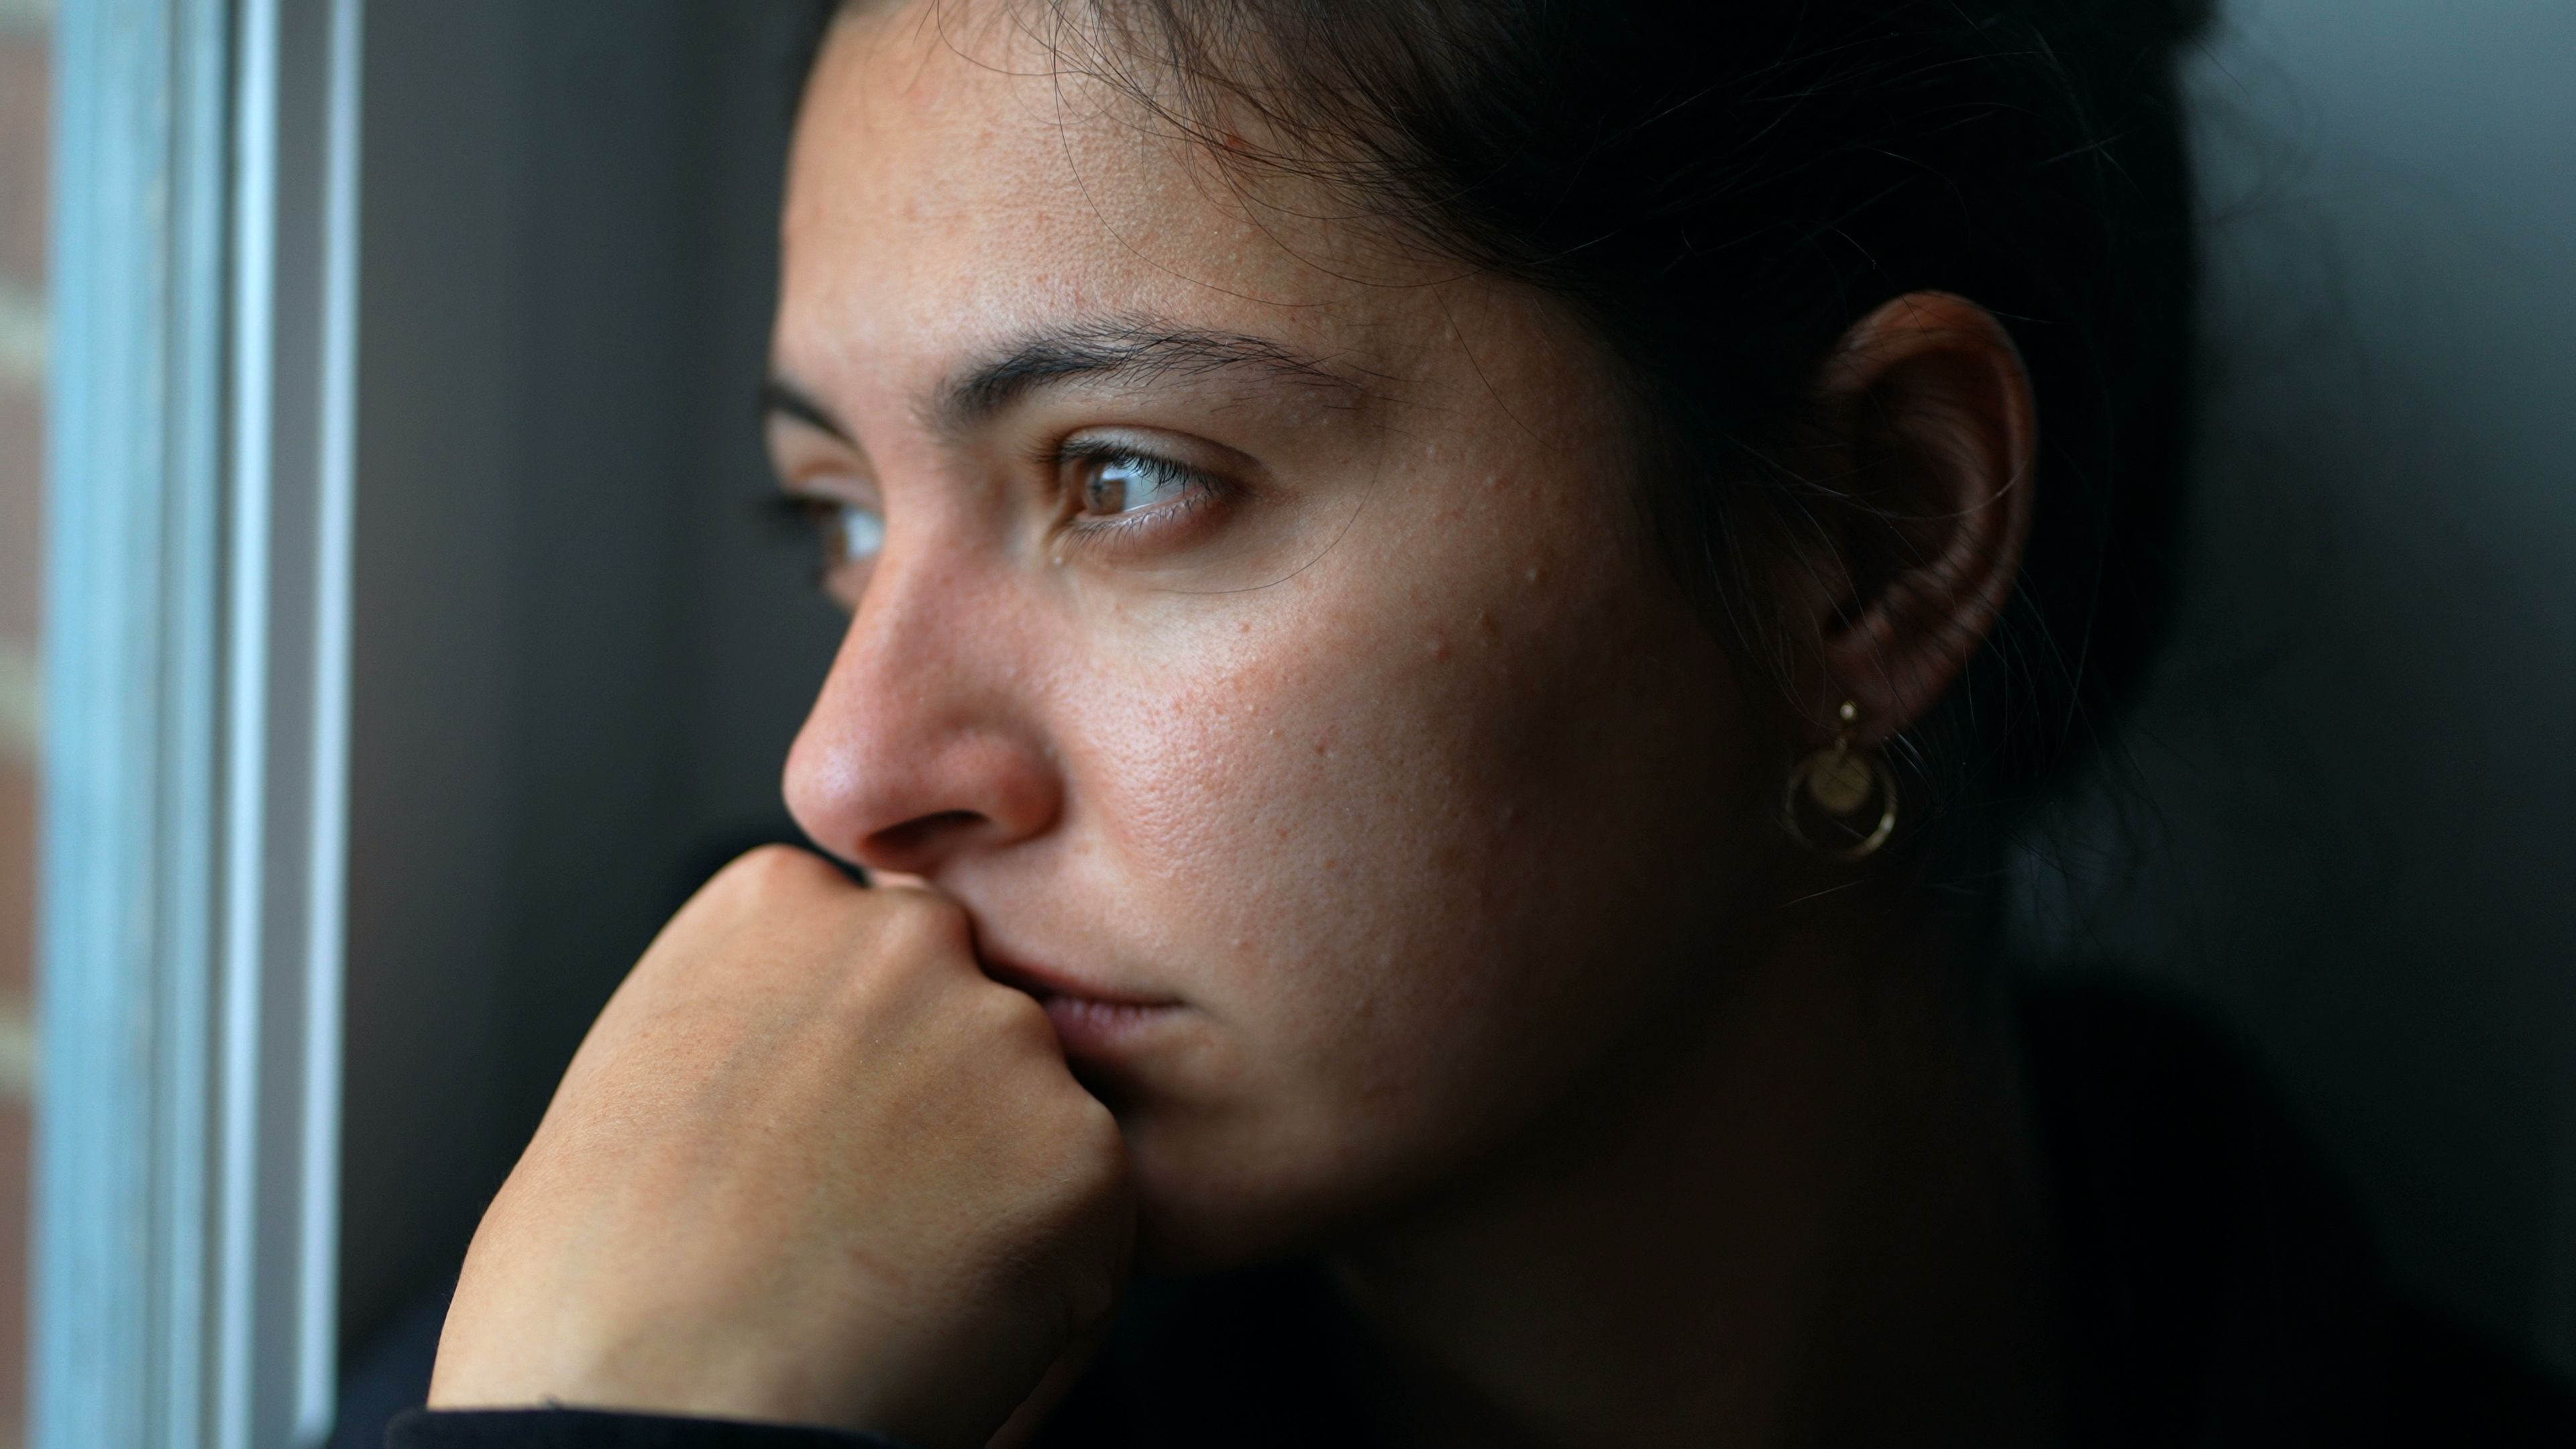 A woman looking sad | Source: Shutterstock